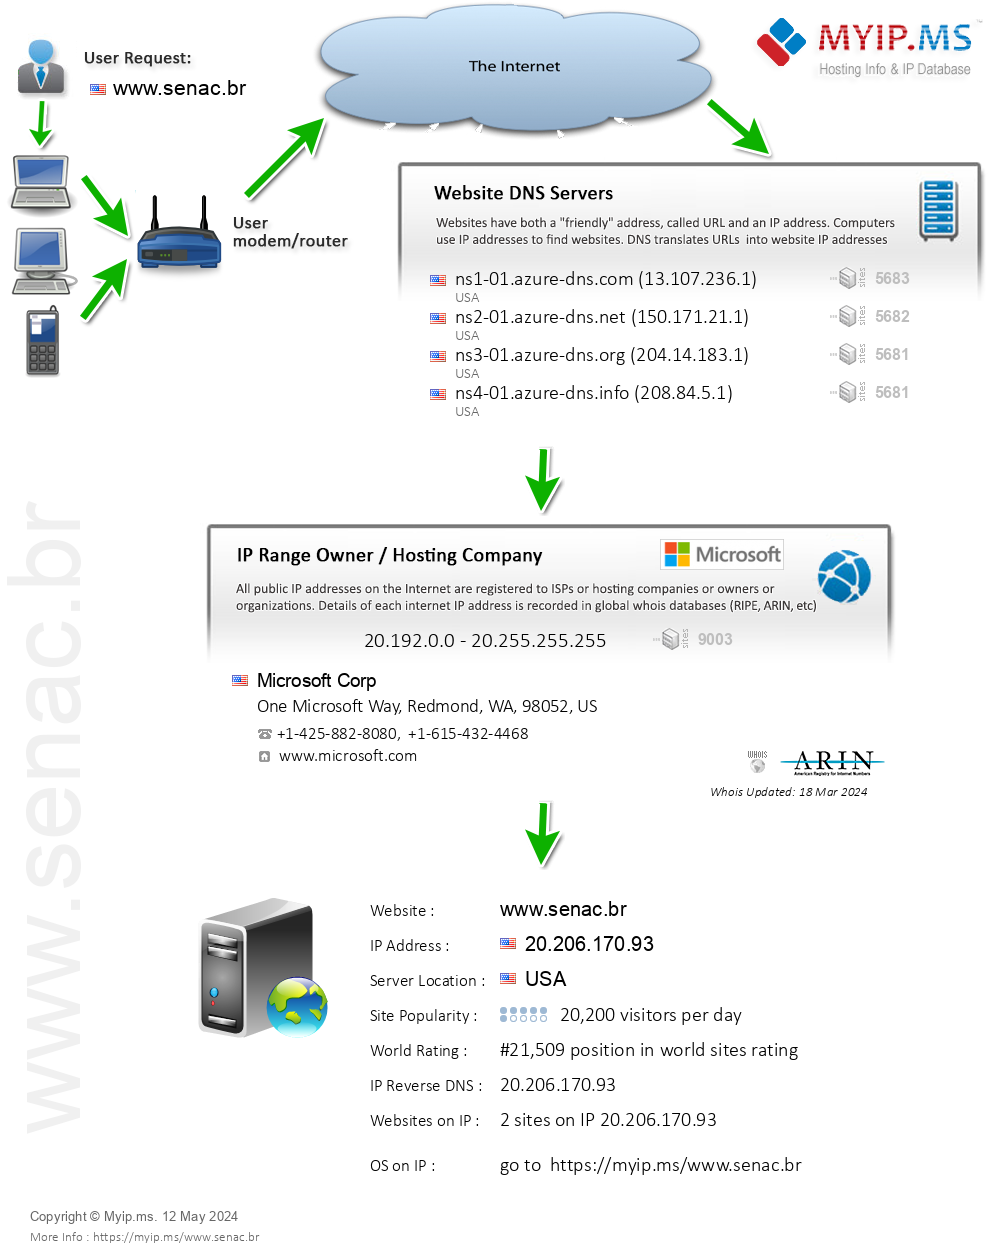 Senac.br - Website Hosting Visual IP Diagram